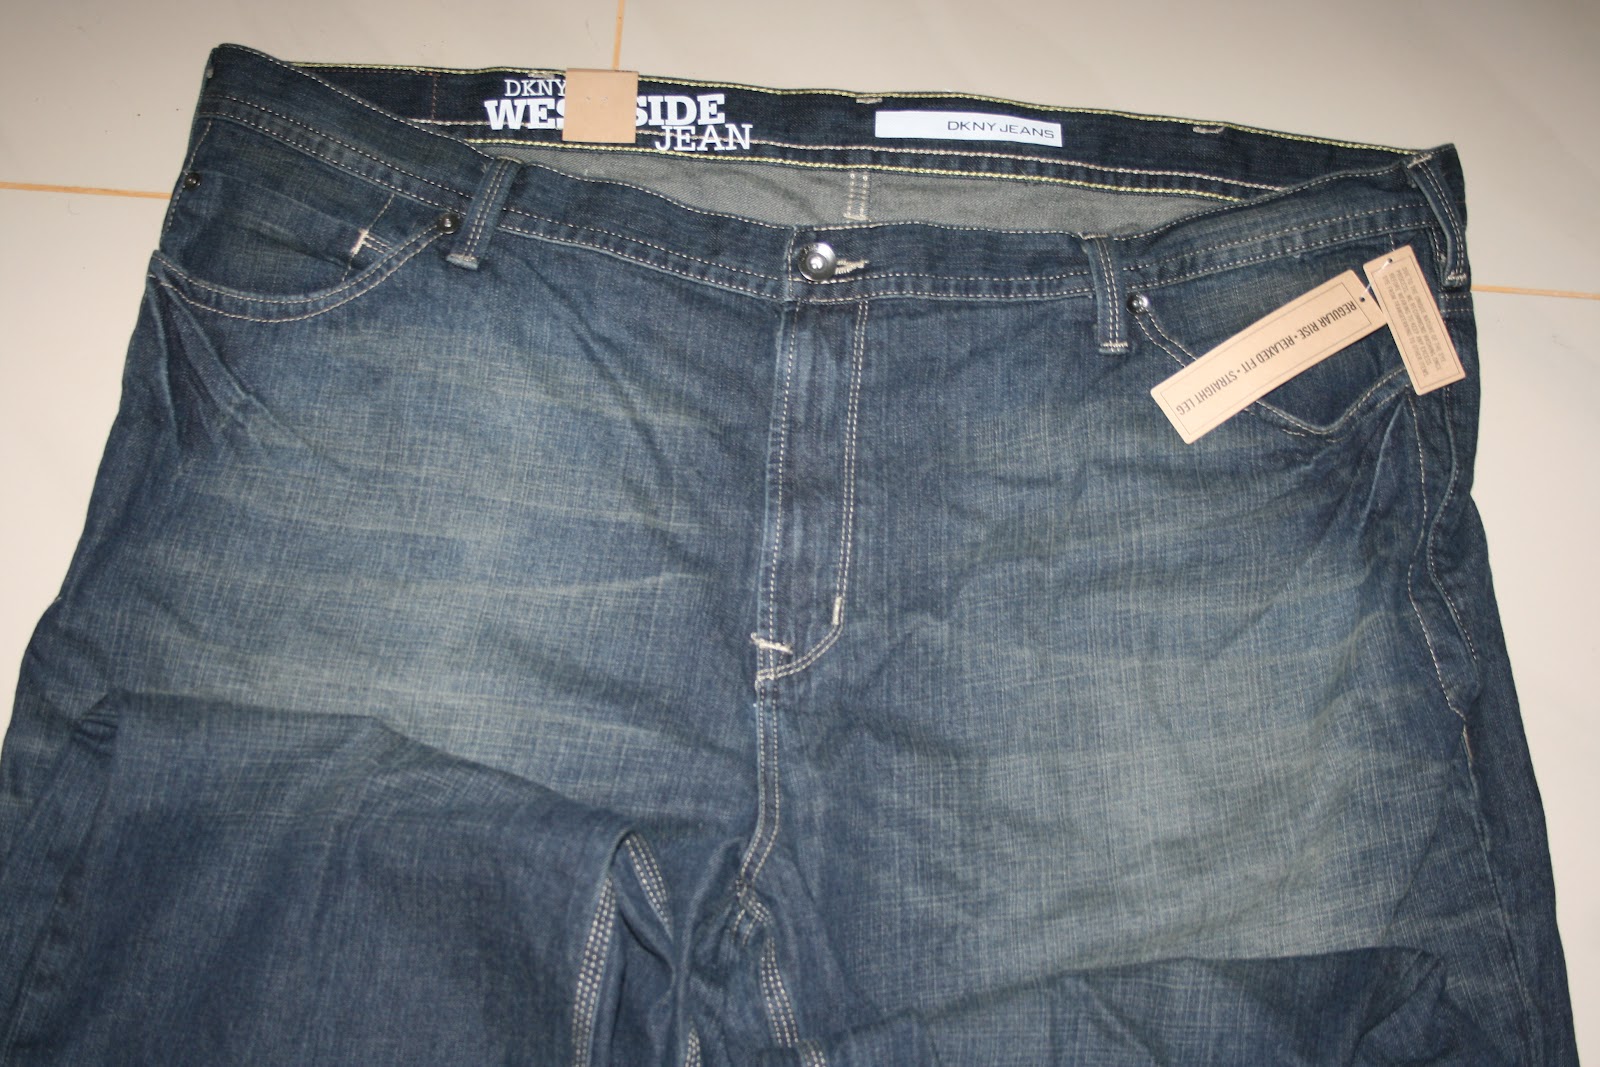 dkny jeans price